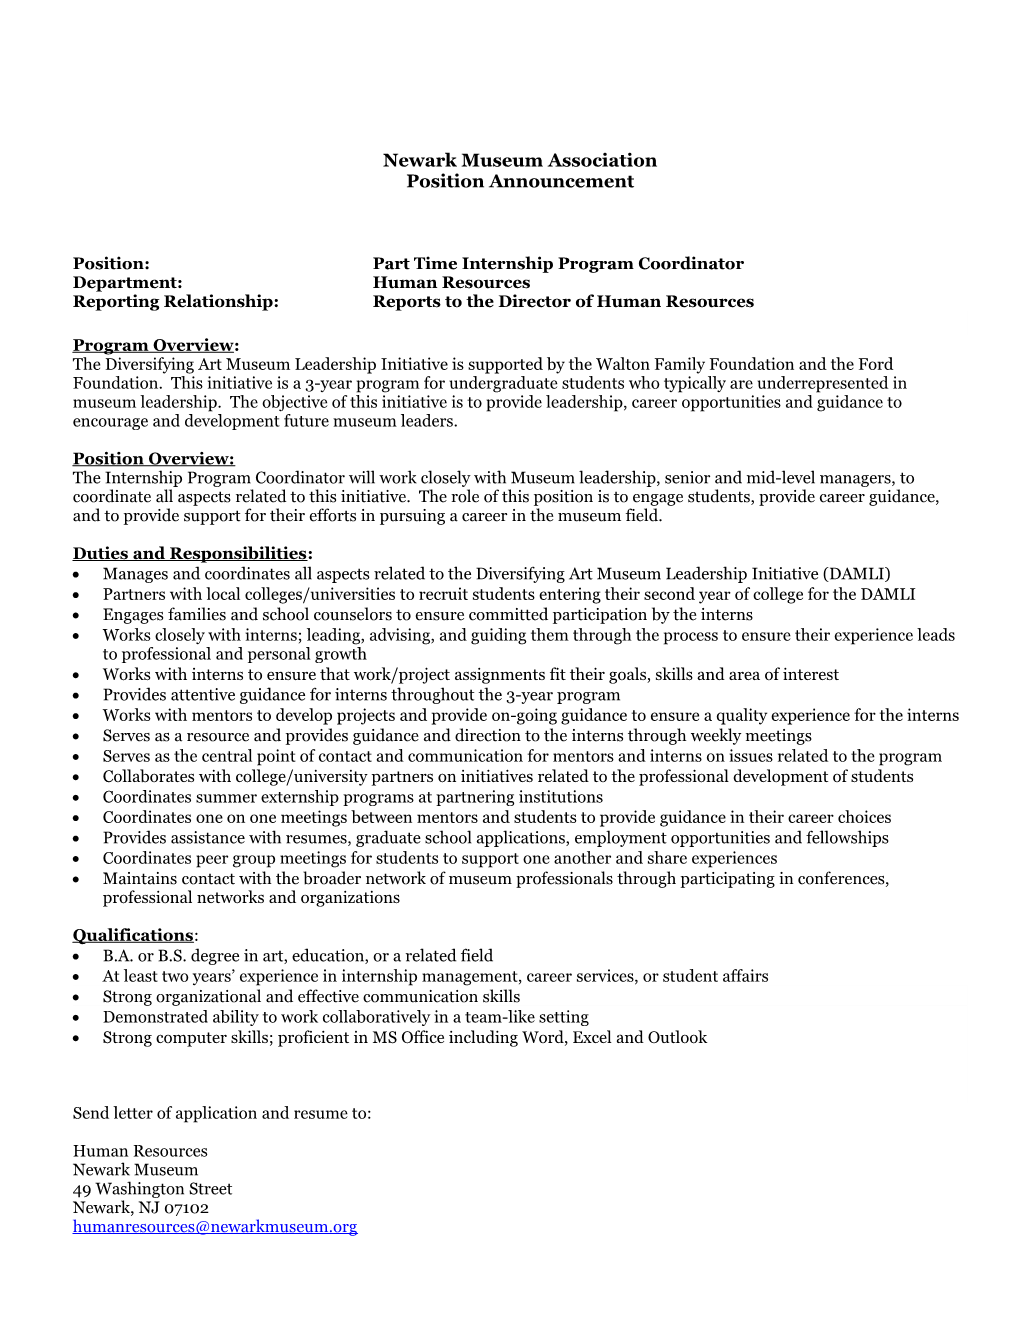 Position:Part Time Internship Program Coordinator